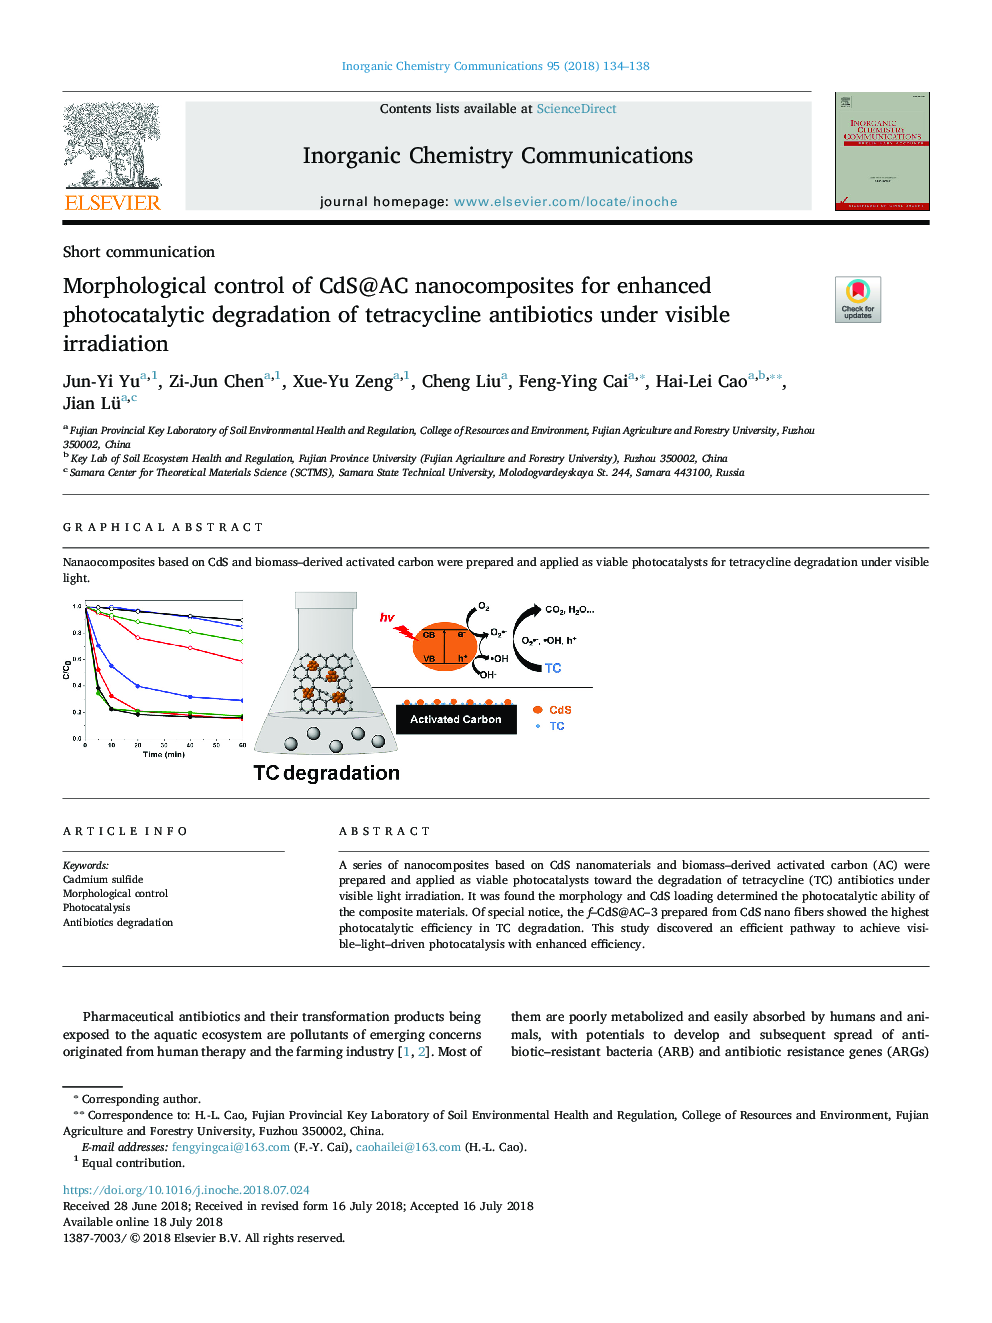 Morphological control of CdS@AC nanocomposites for enhanced photocatalytic degradation of tetracycline antibiotics under visible irradiation